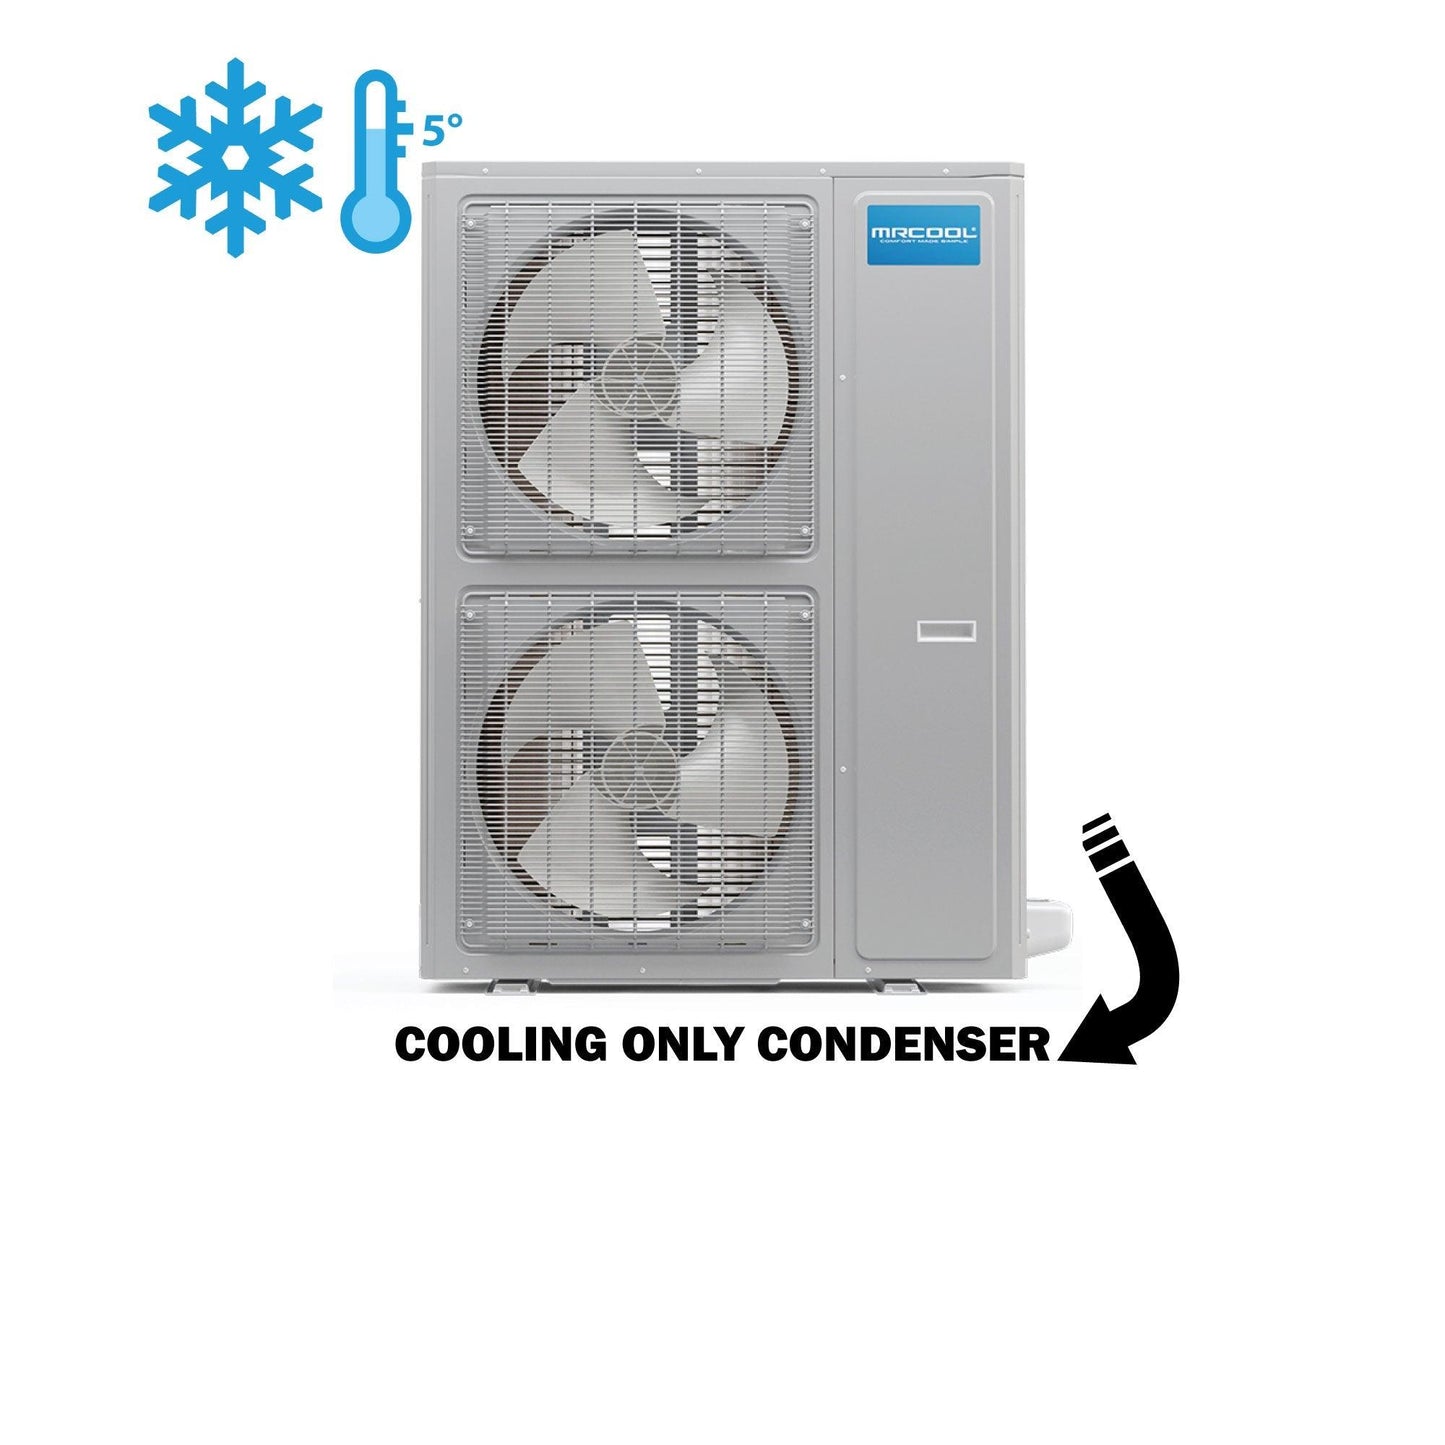 Cooling only condenser 4860k